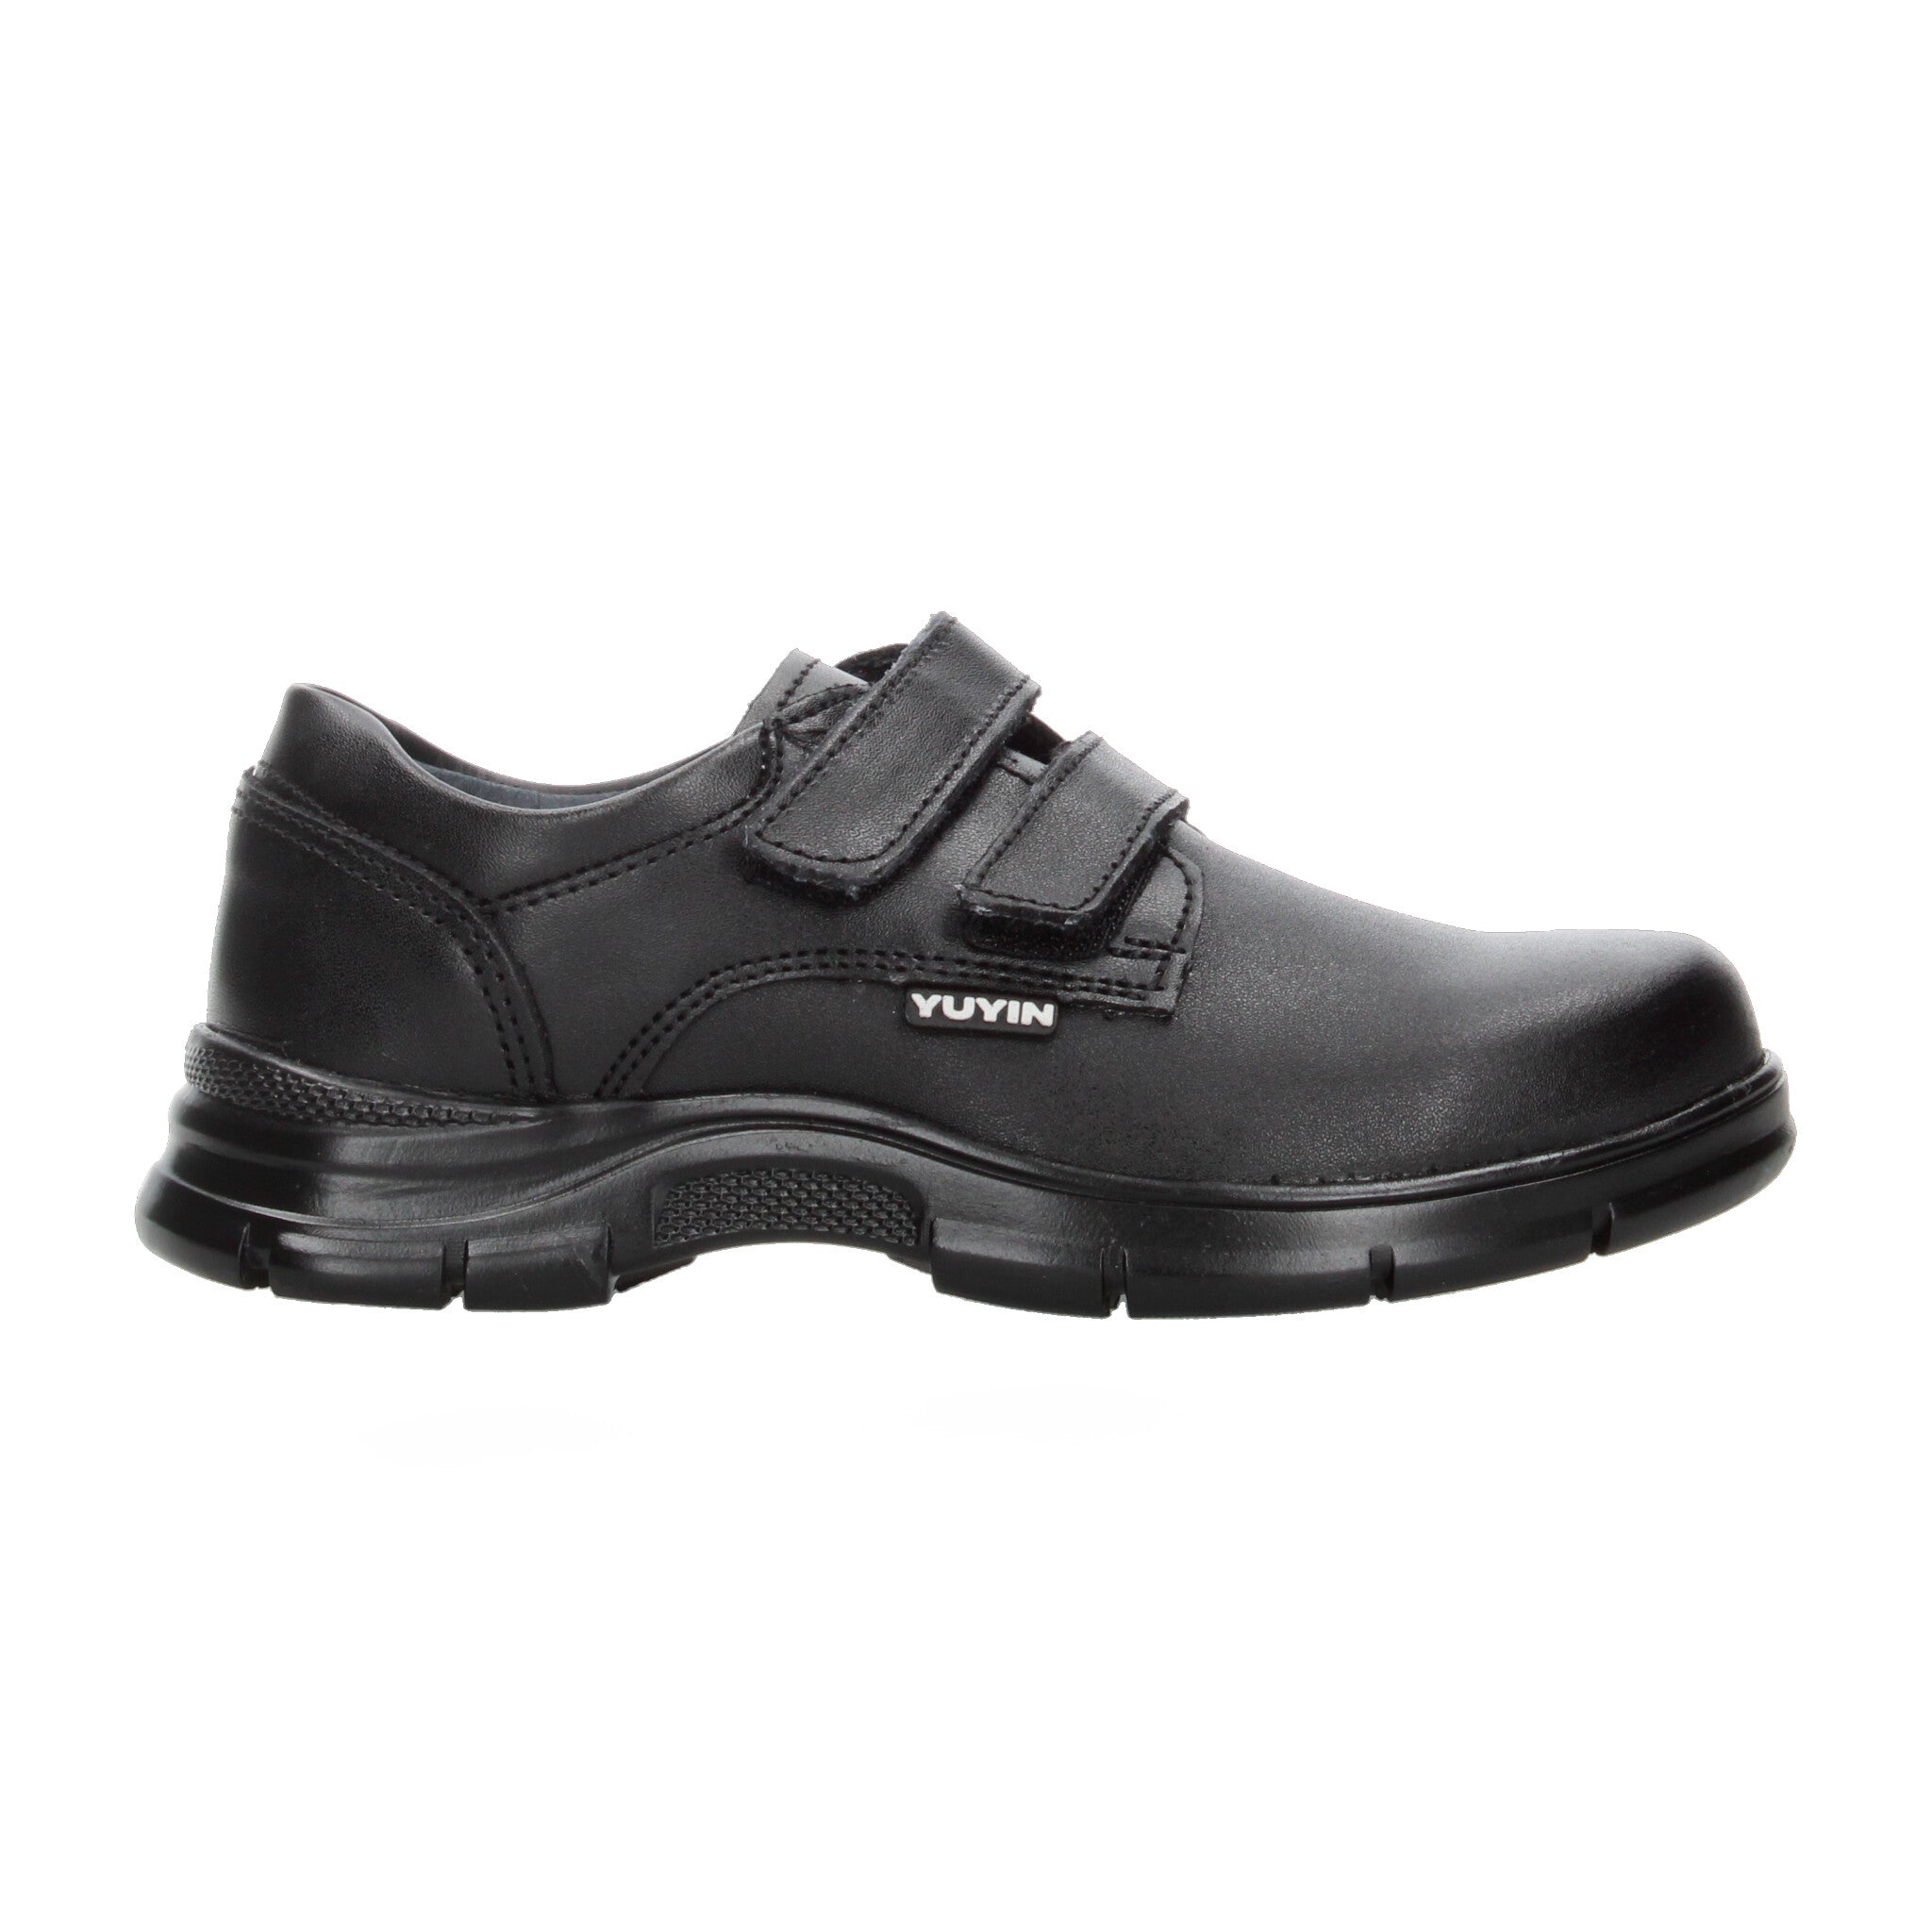 Zapato Escolar Yuyin Negro para Niño (18 - 21.5) [YUY507] YUYIN 